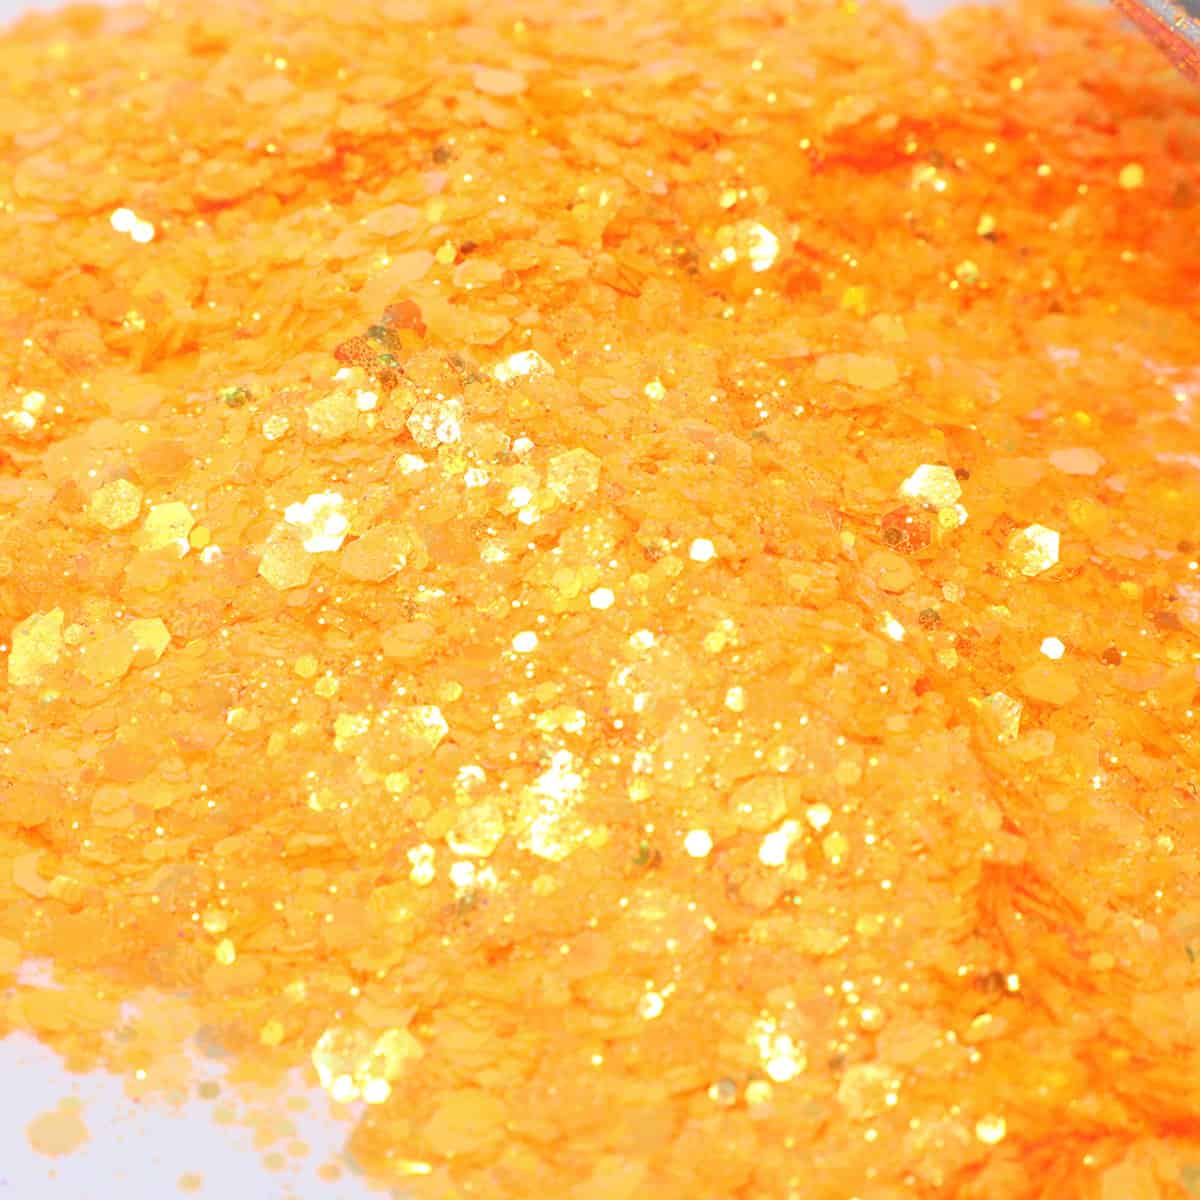 Flaky gold glitter